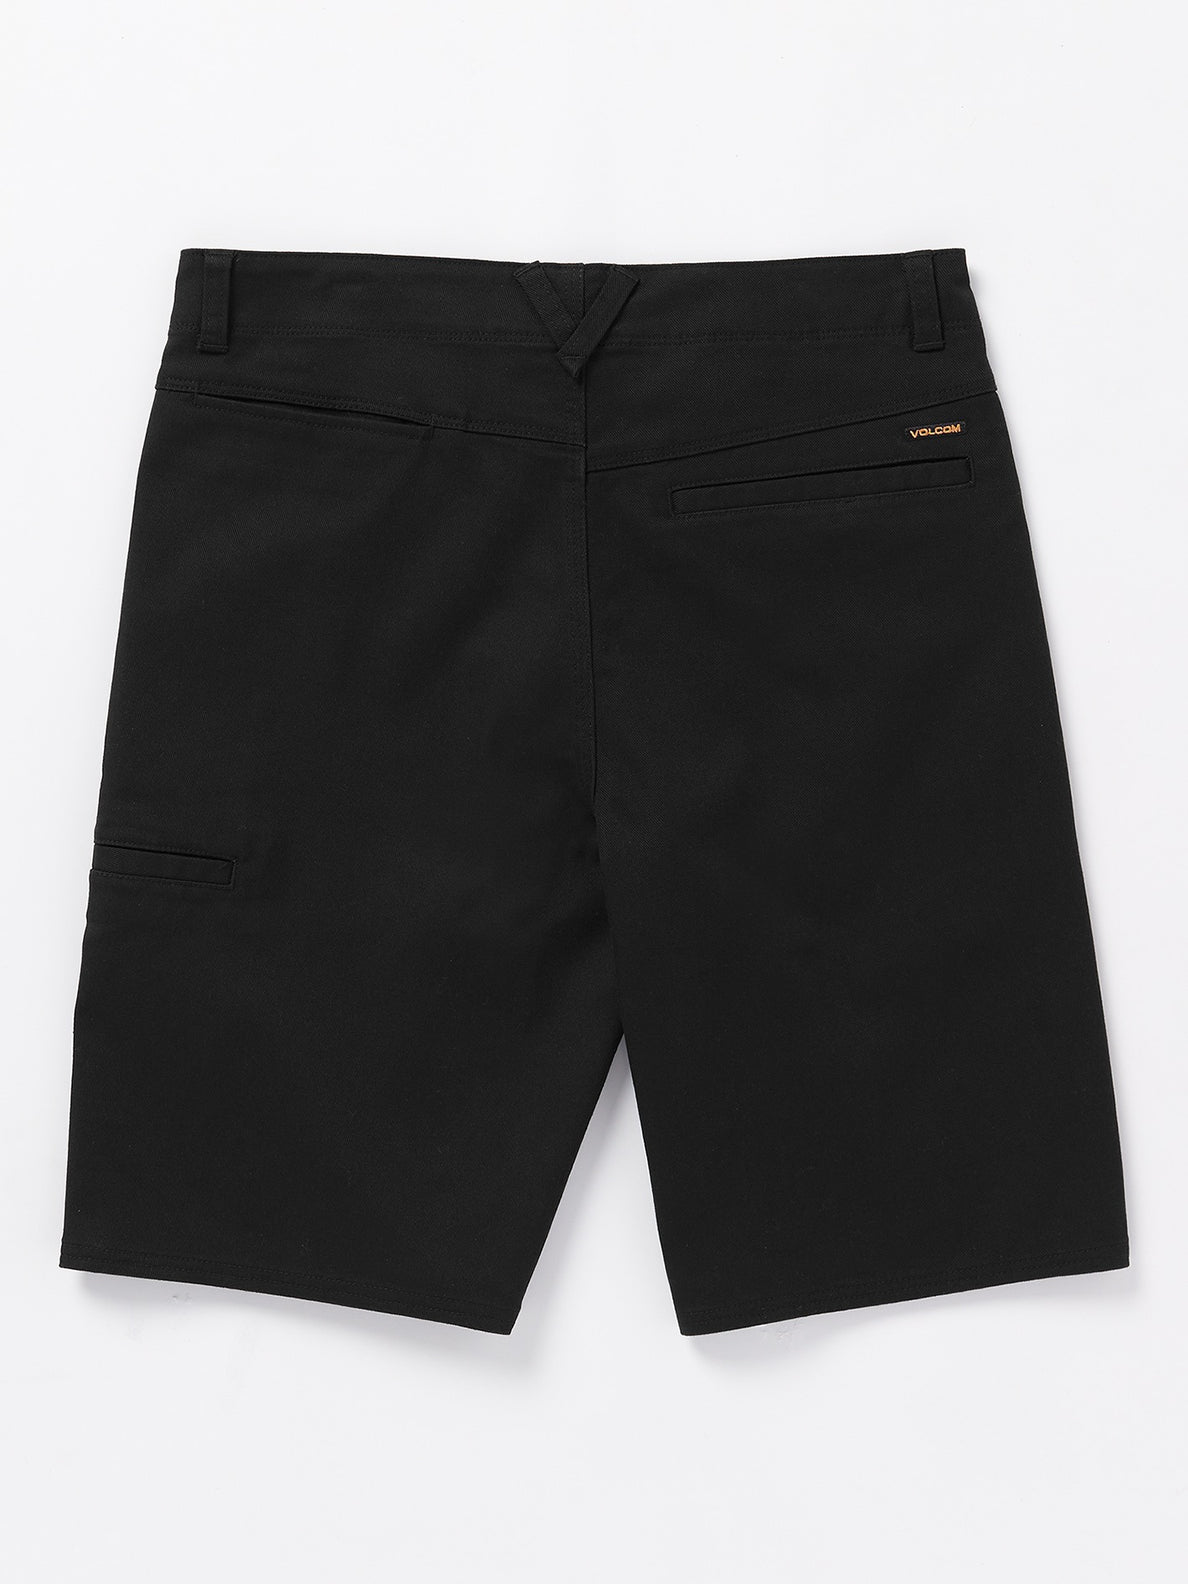 Freestone Shorts - Black